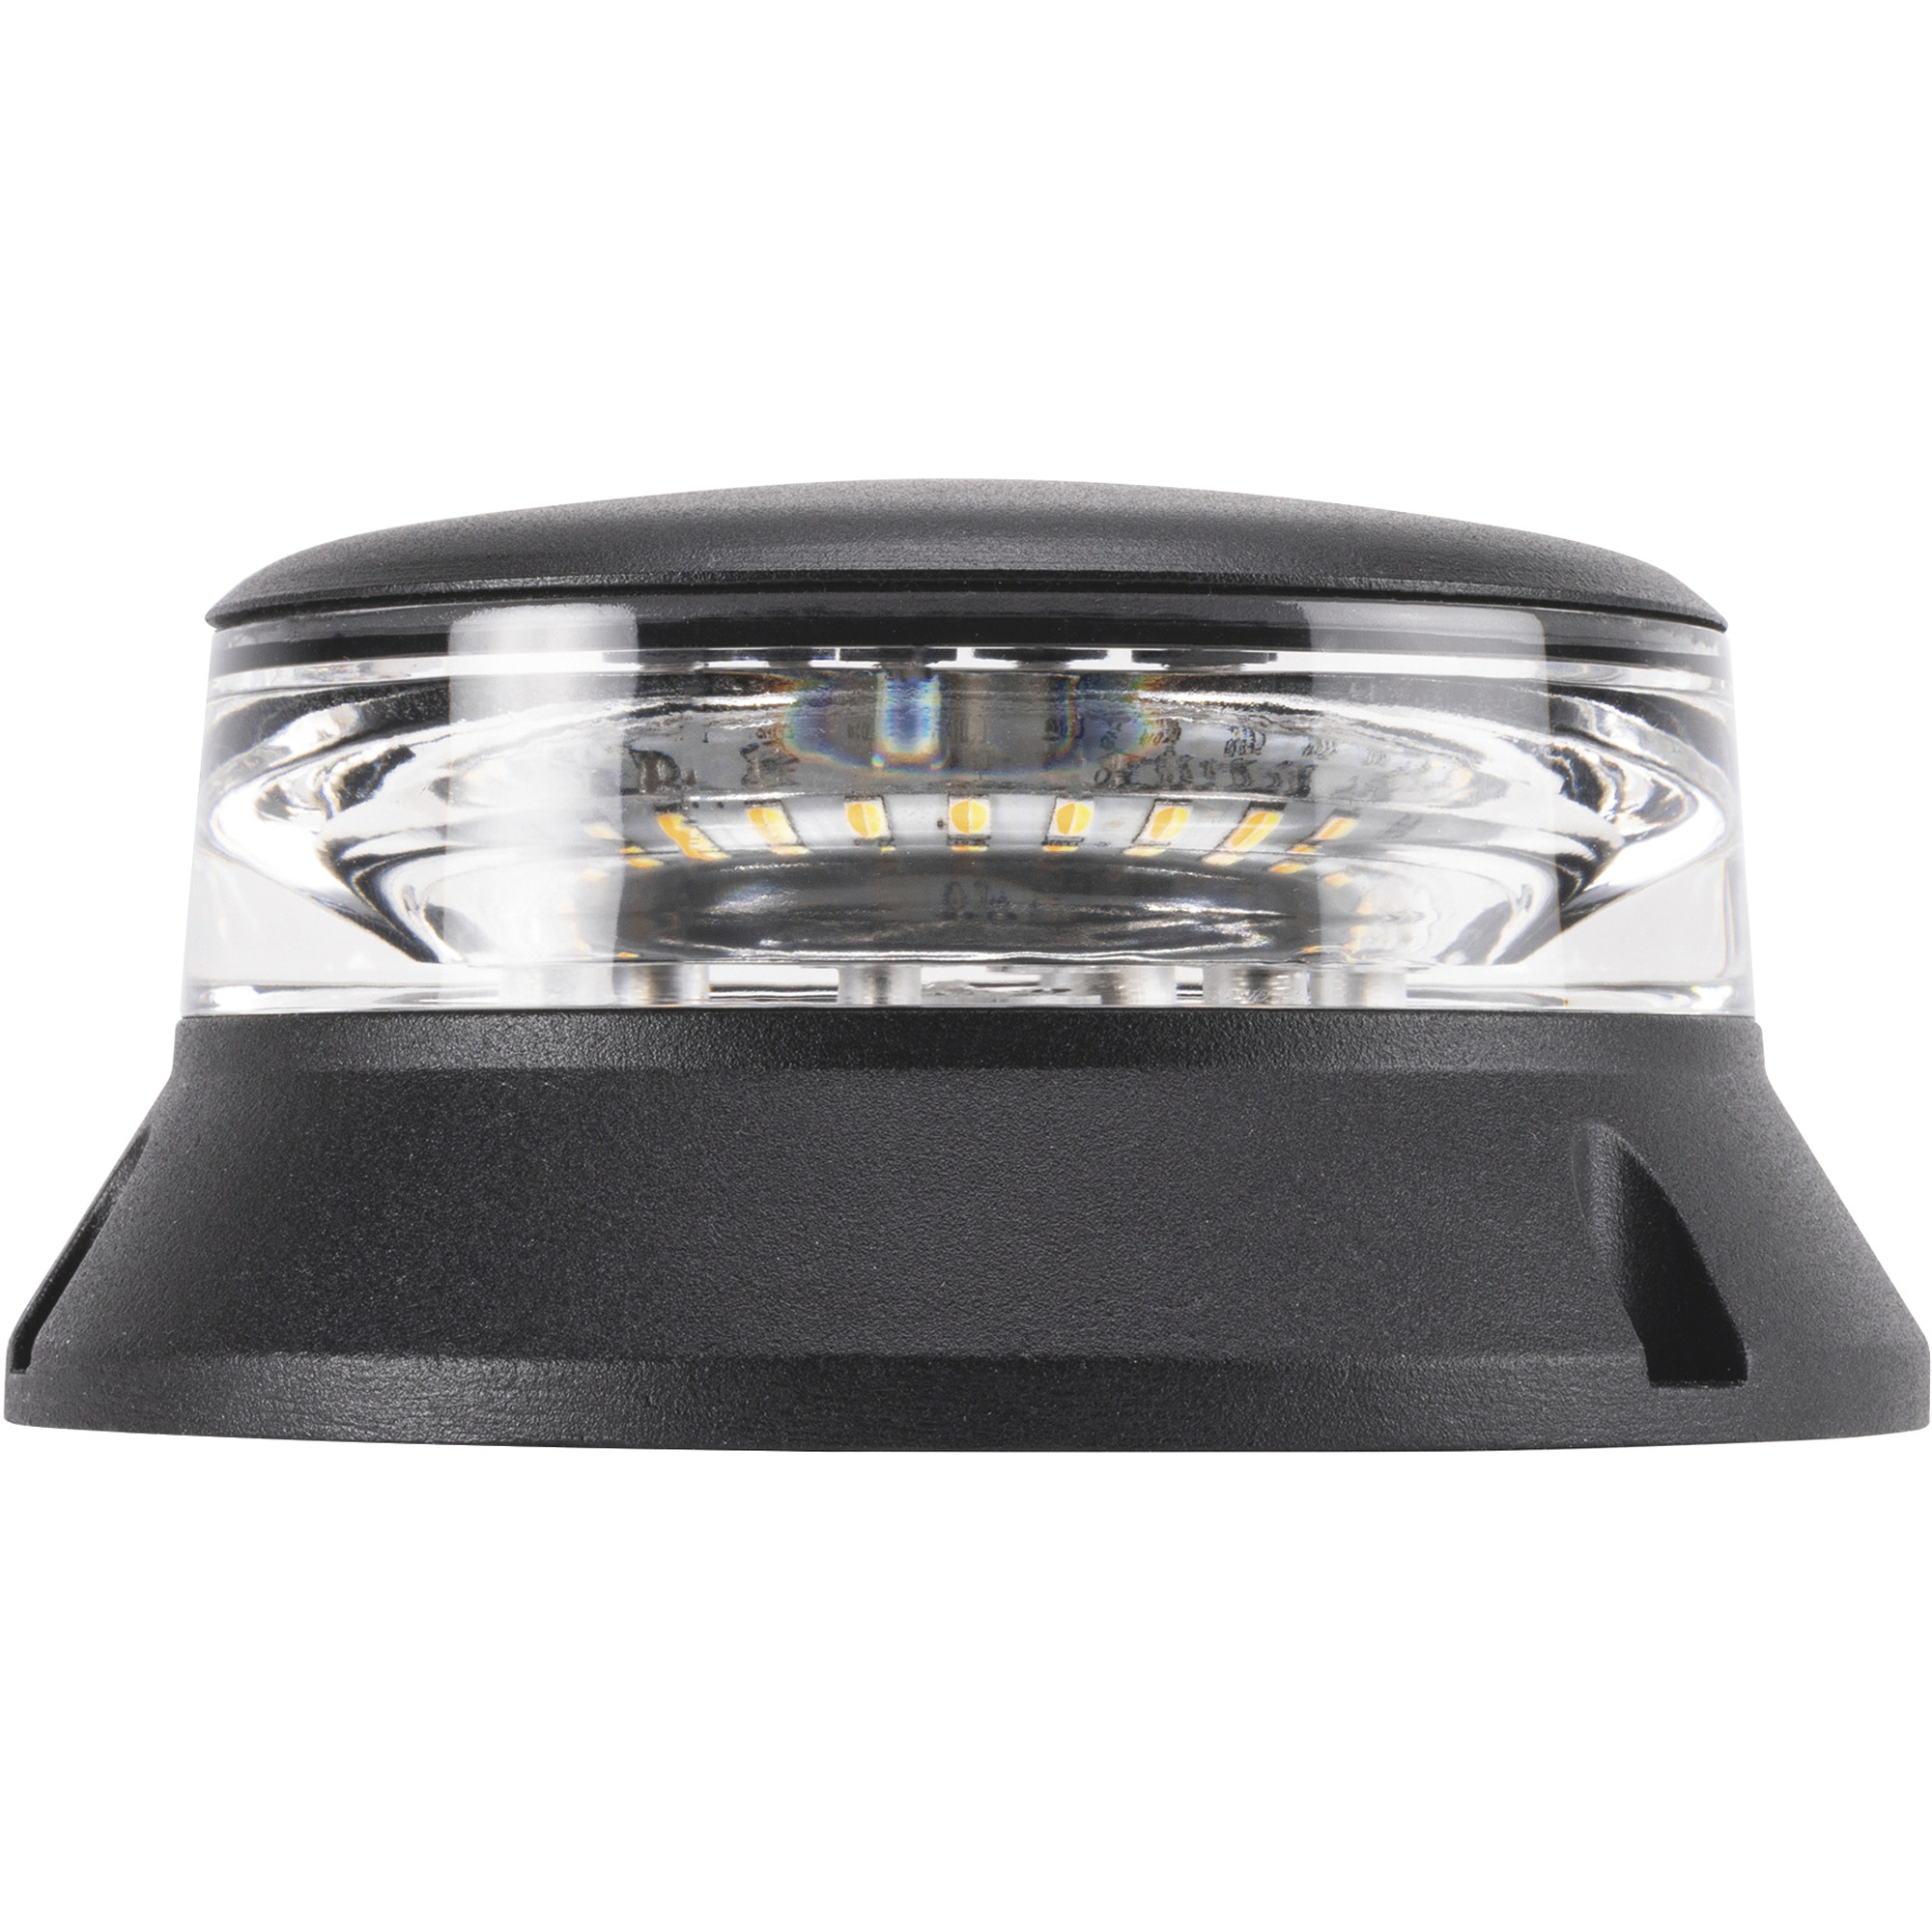 Blazer LED Short Beacon Class 2 Warning Light â 12V, Clear Lens/Amber and White LEDs, 9 Flash Patterns, Magnetic Mount, Model C36CAC